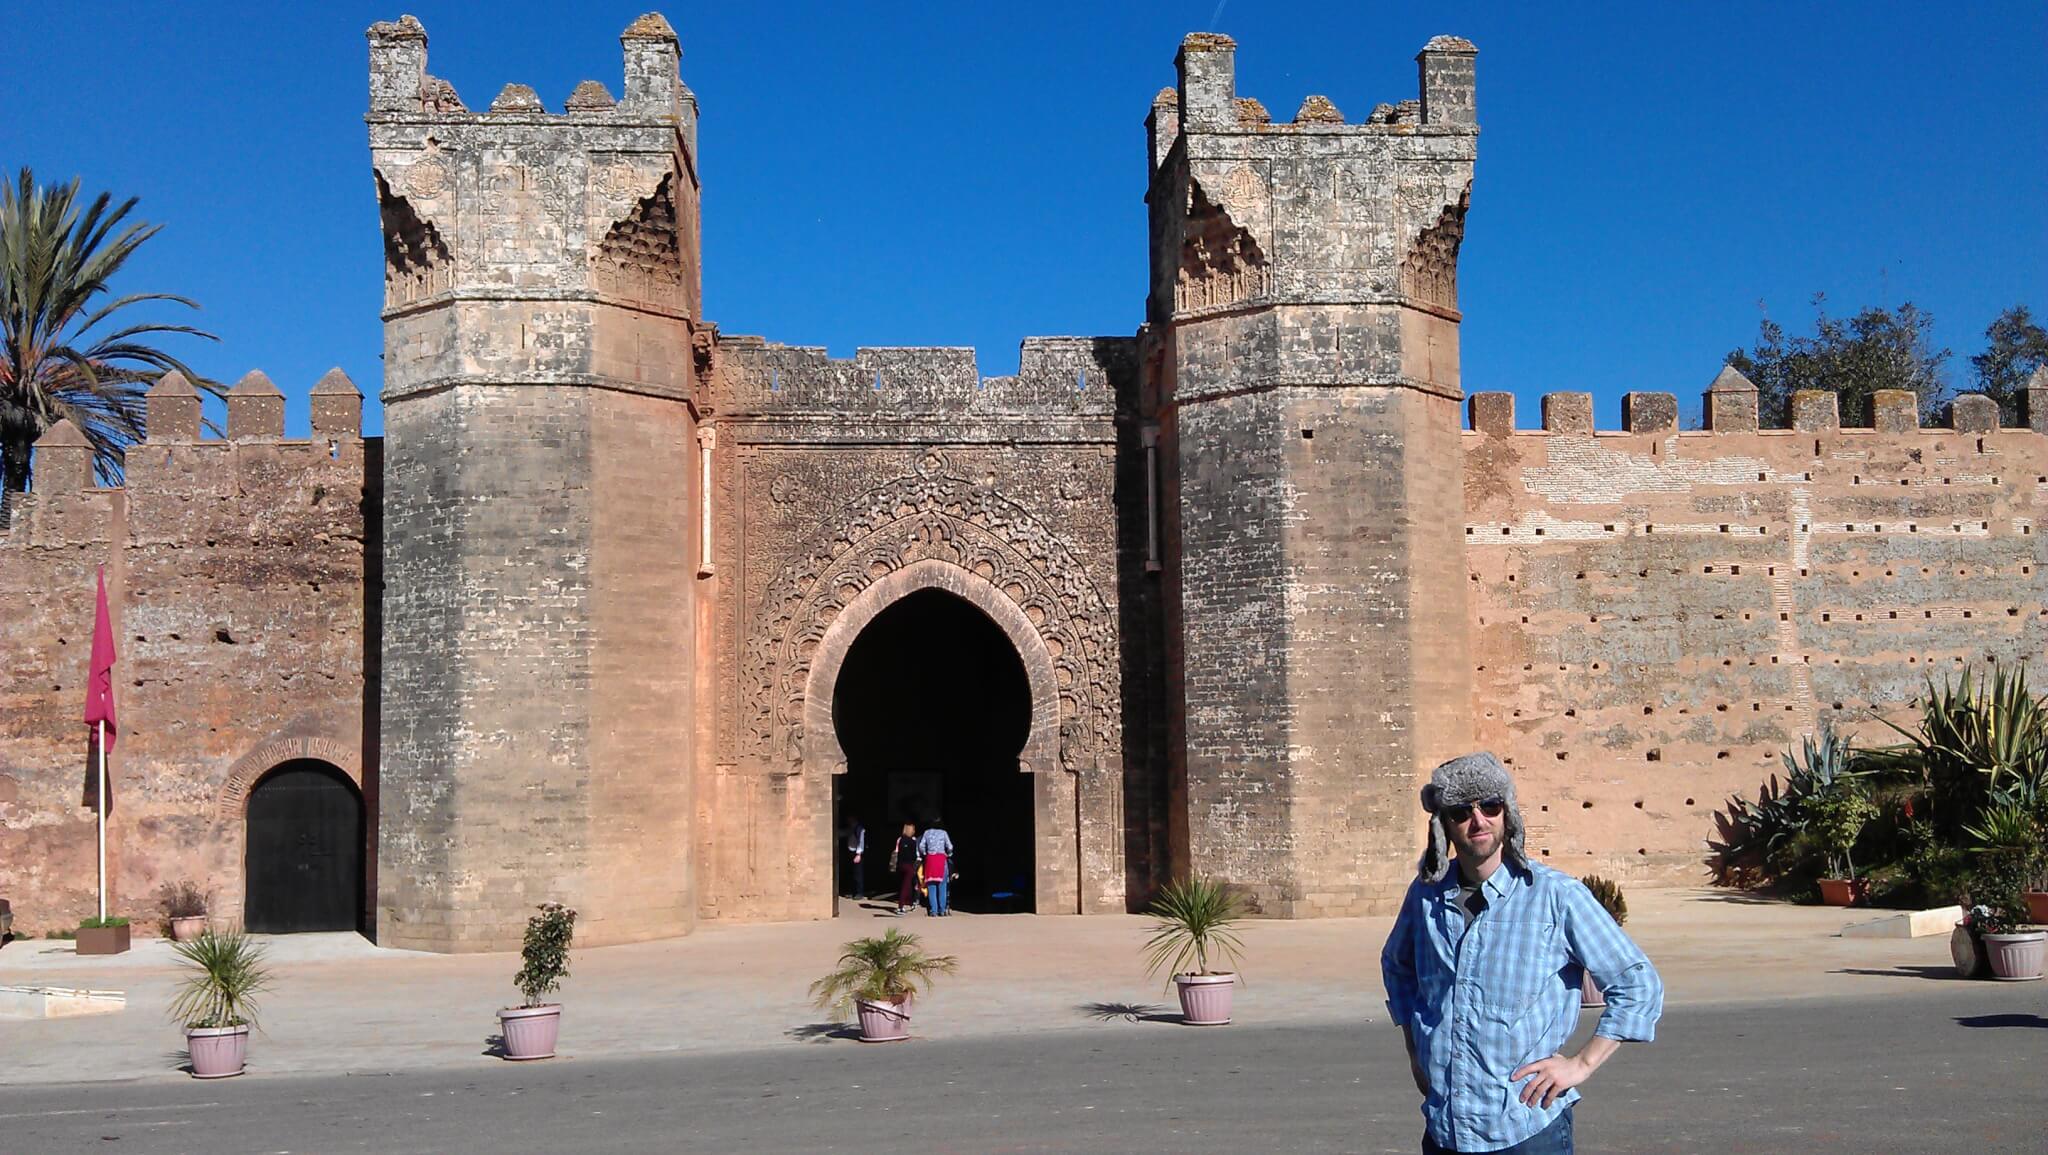 Chellah in Rabat, Morocco